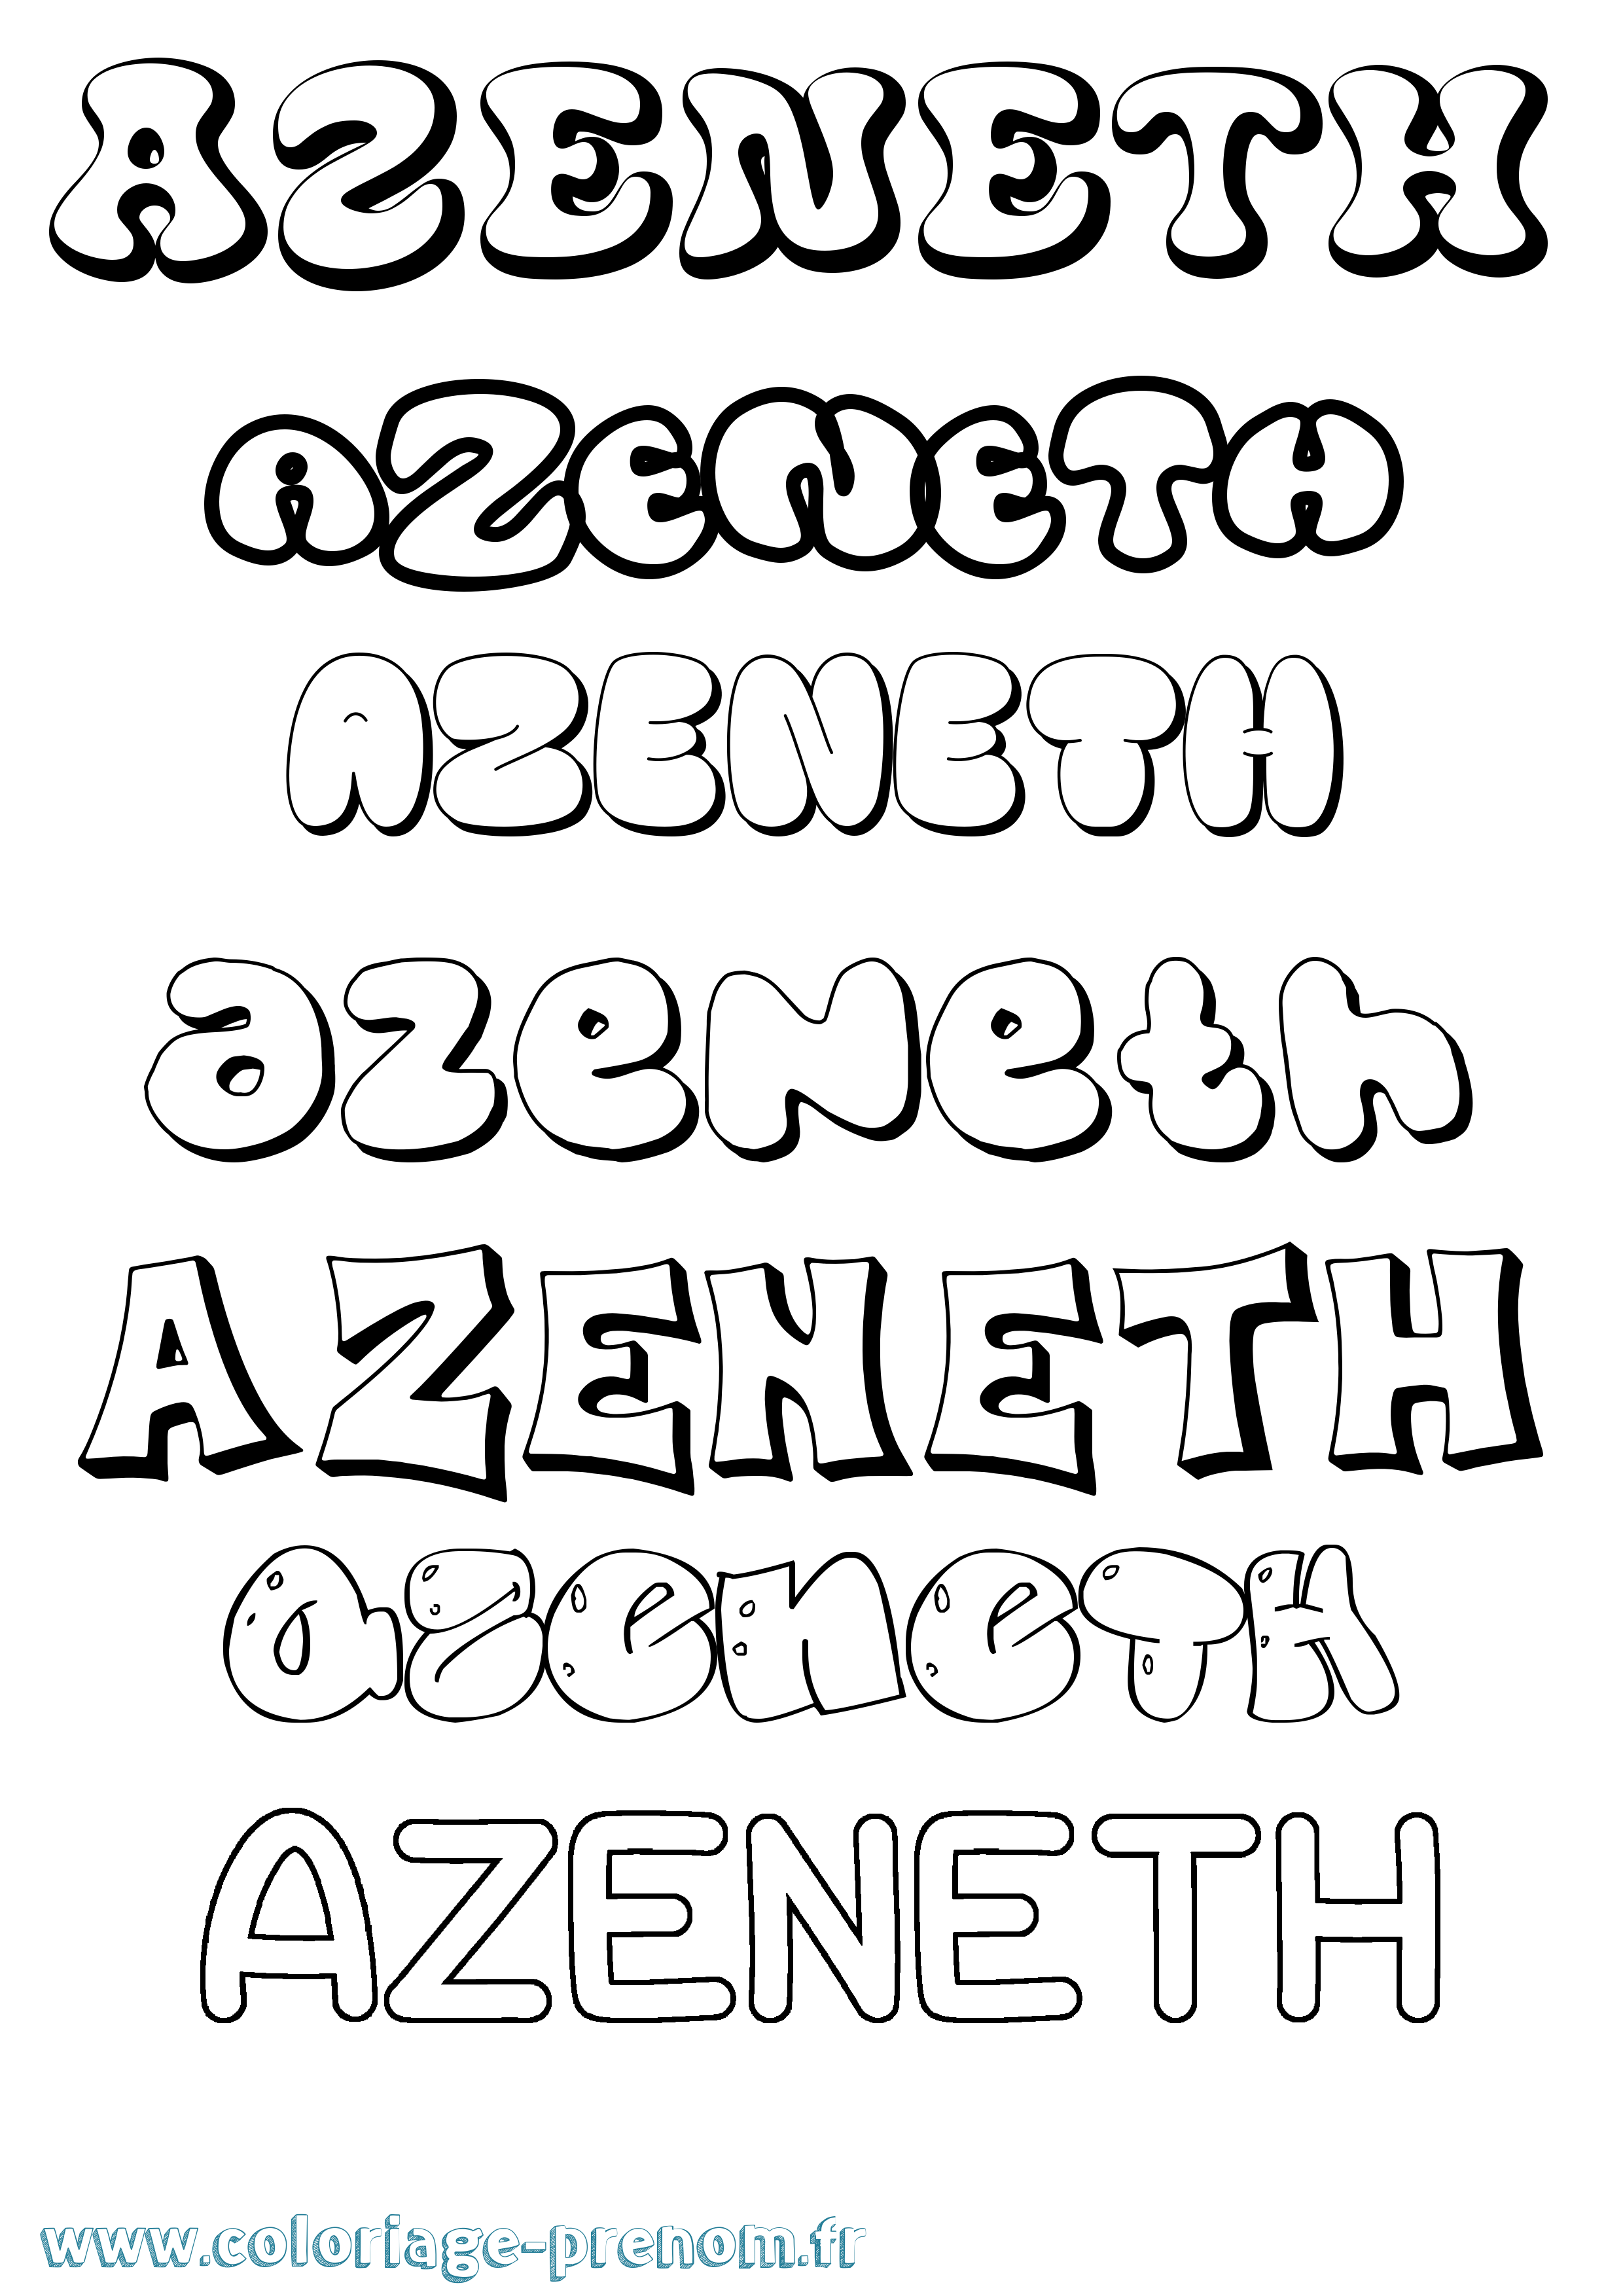 Coloriage prénom Azeneth Bubble